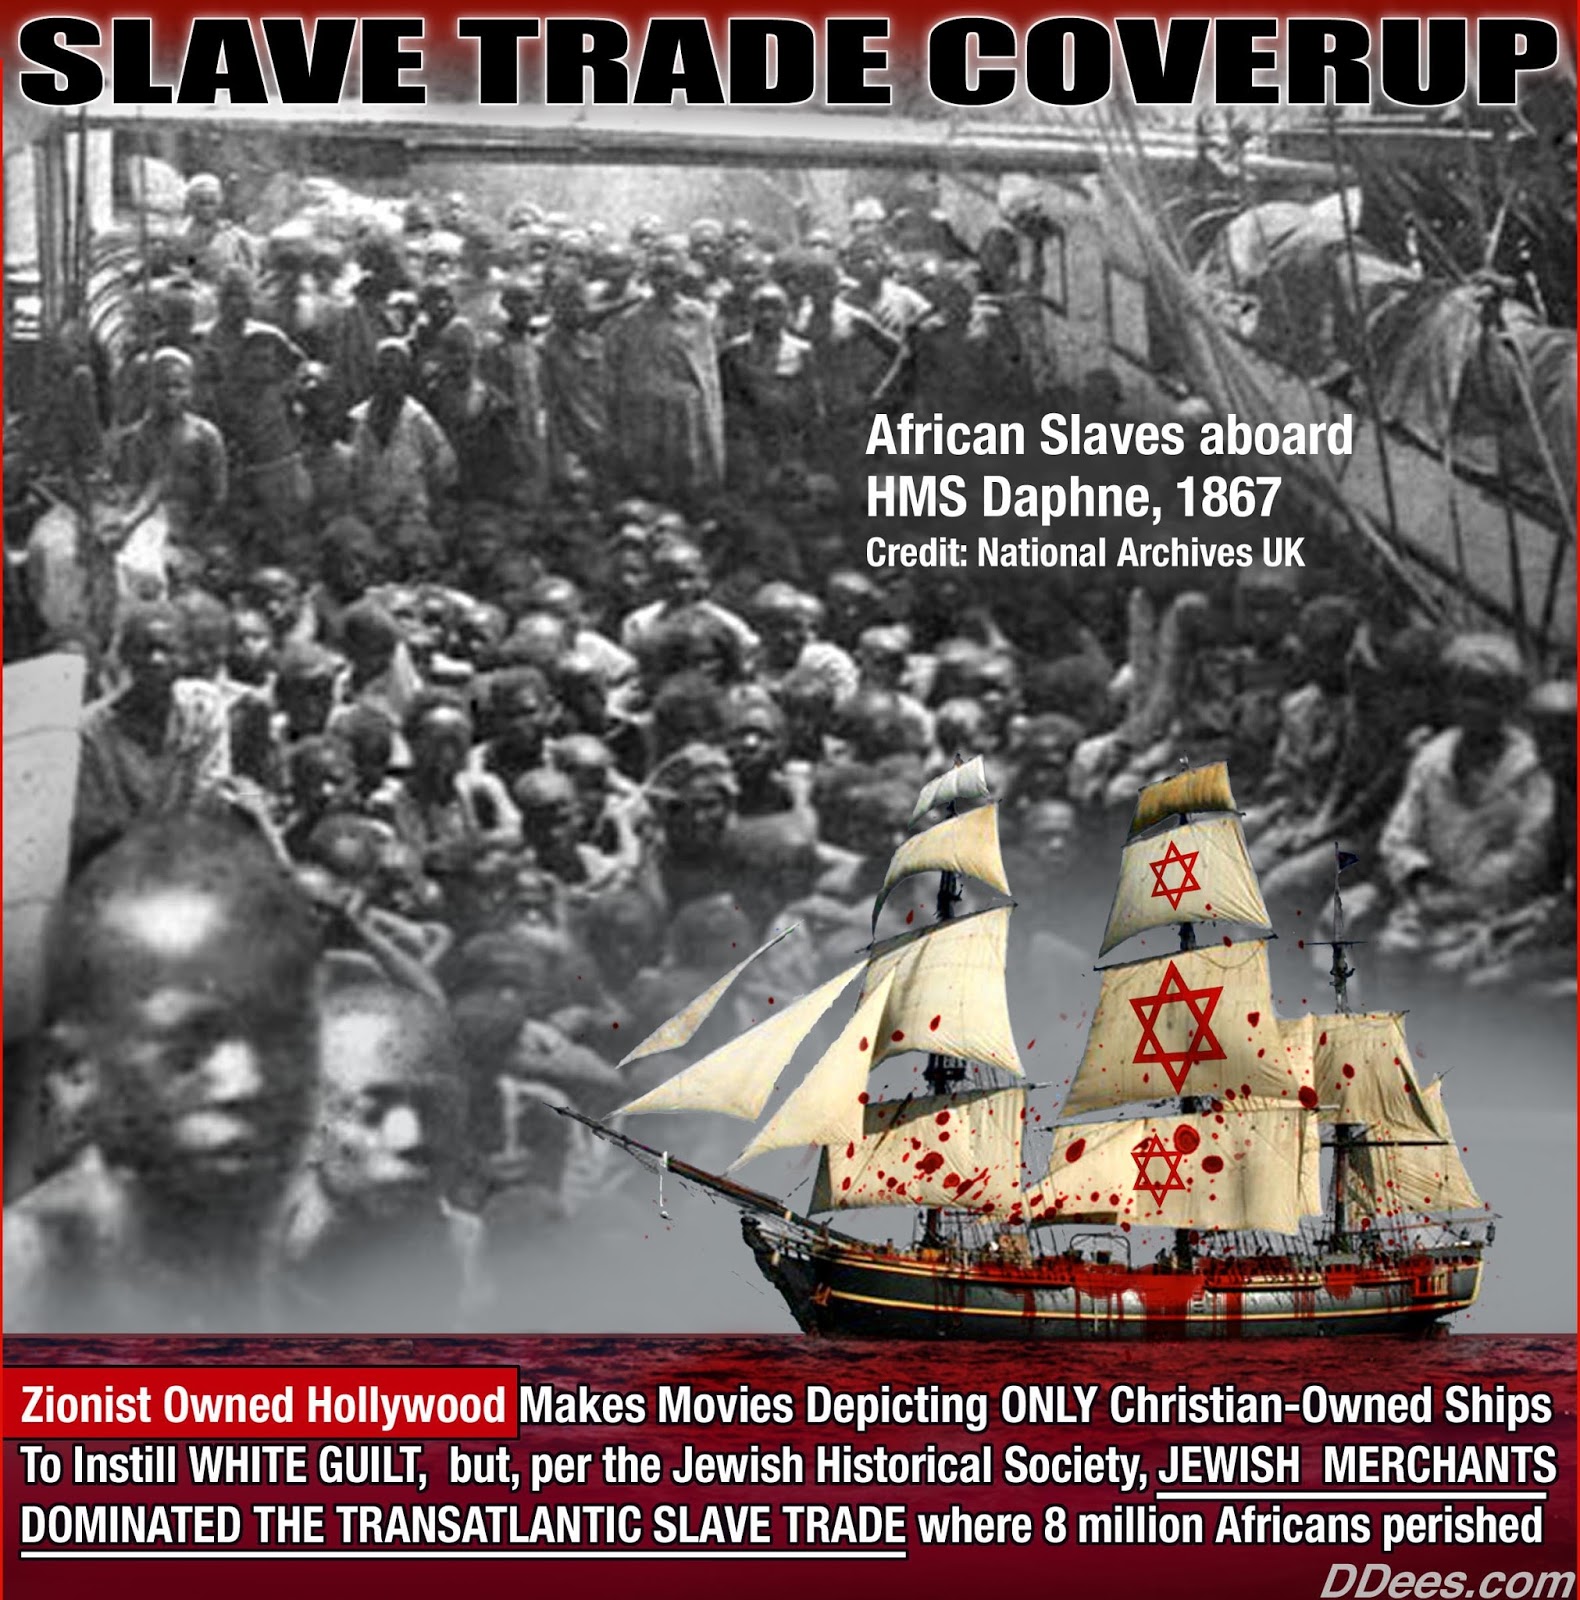 http://richardboyden.com/Jewish-owned-slave-ship-HiR.jpg